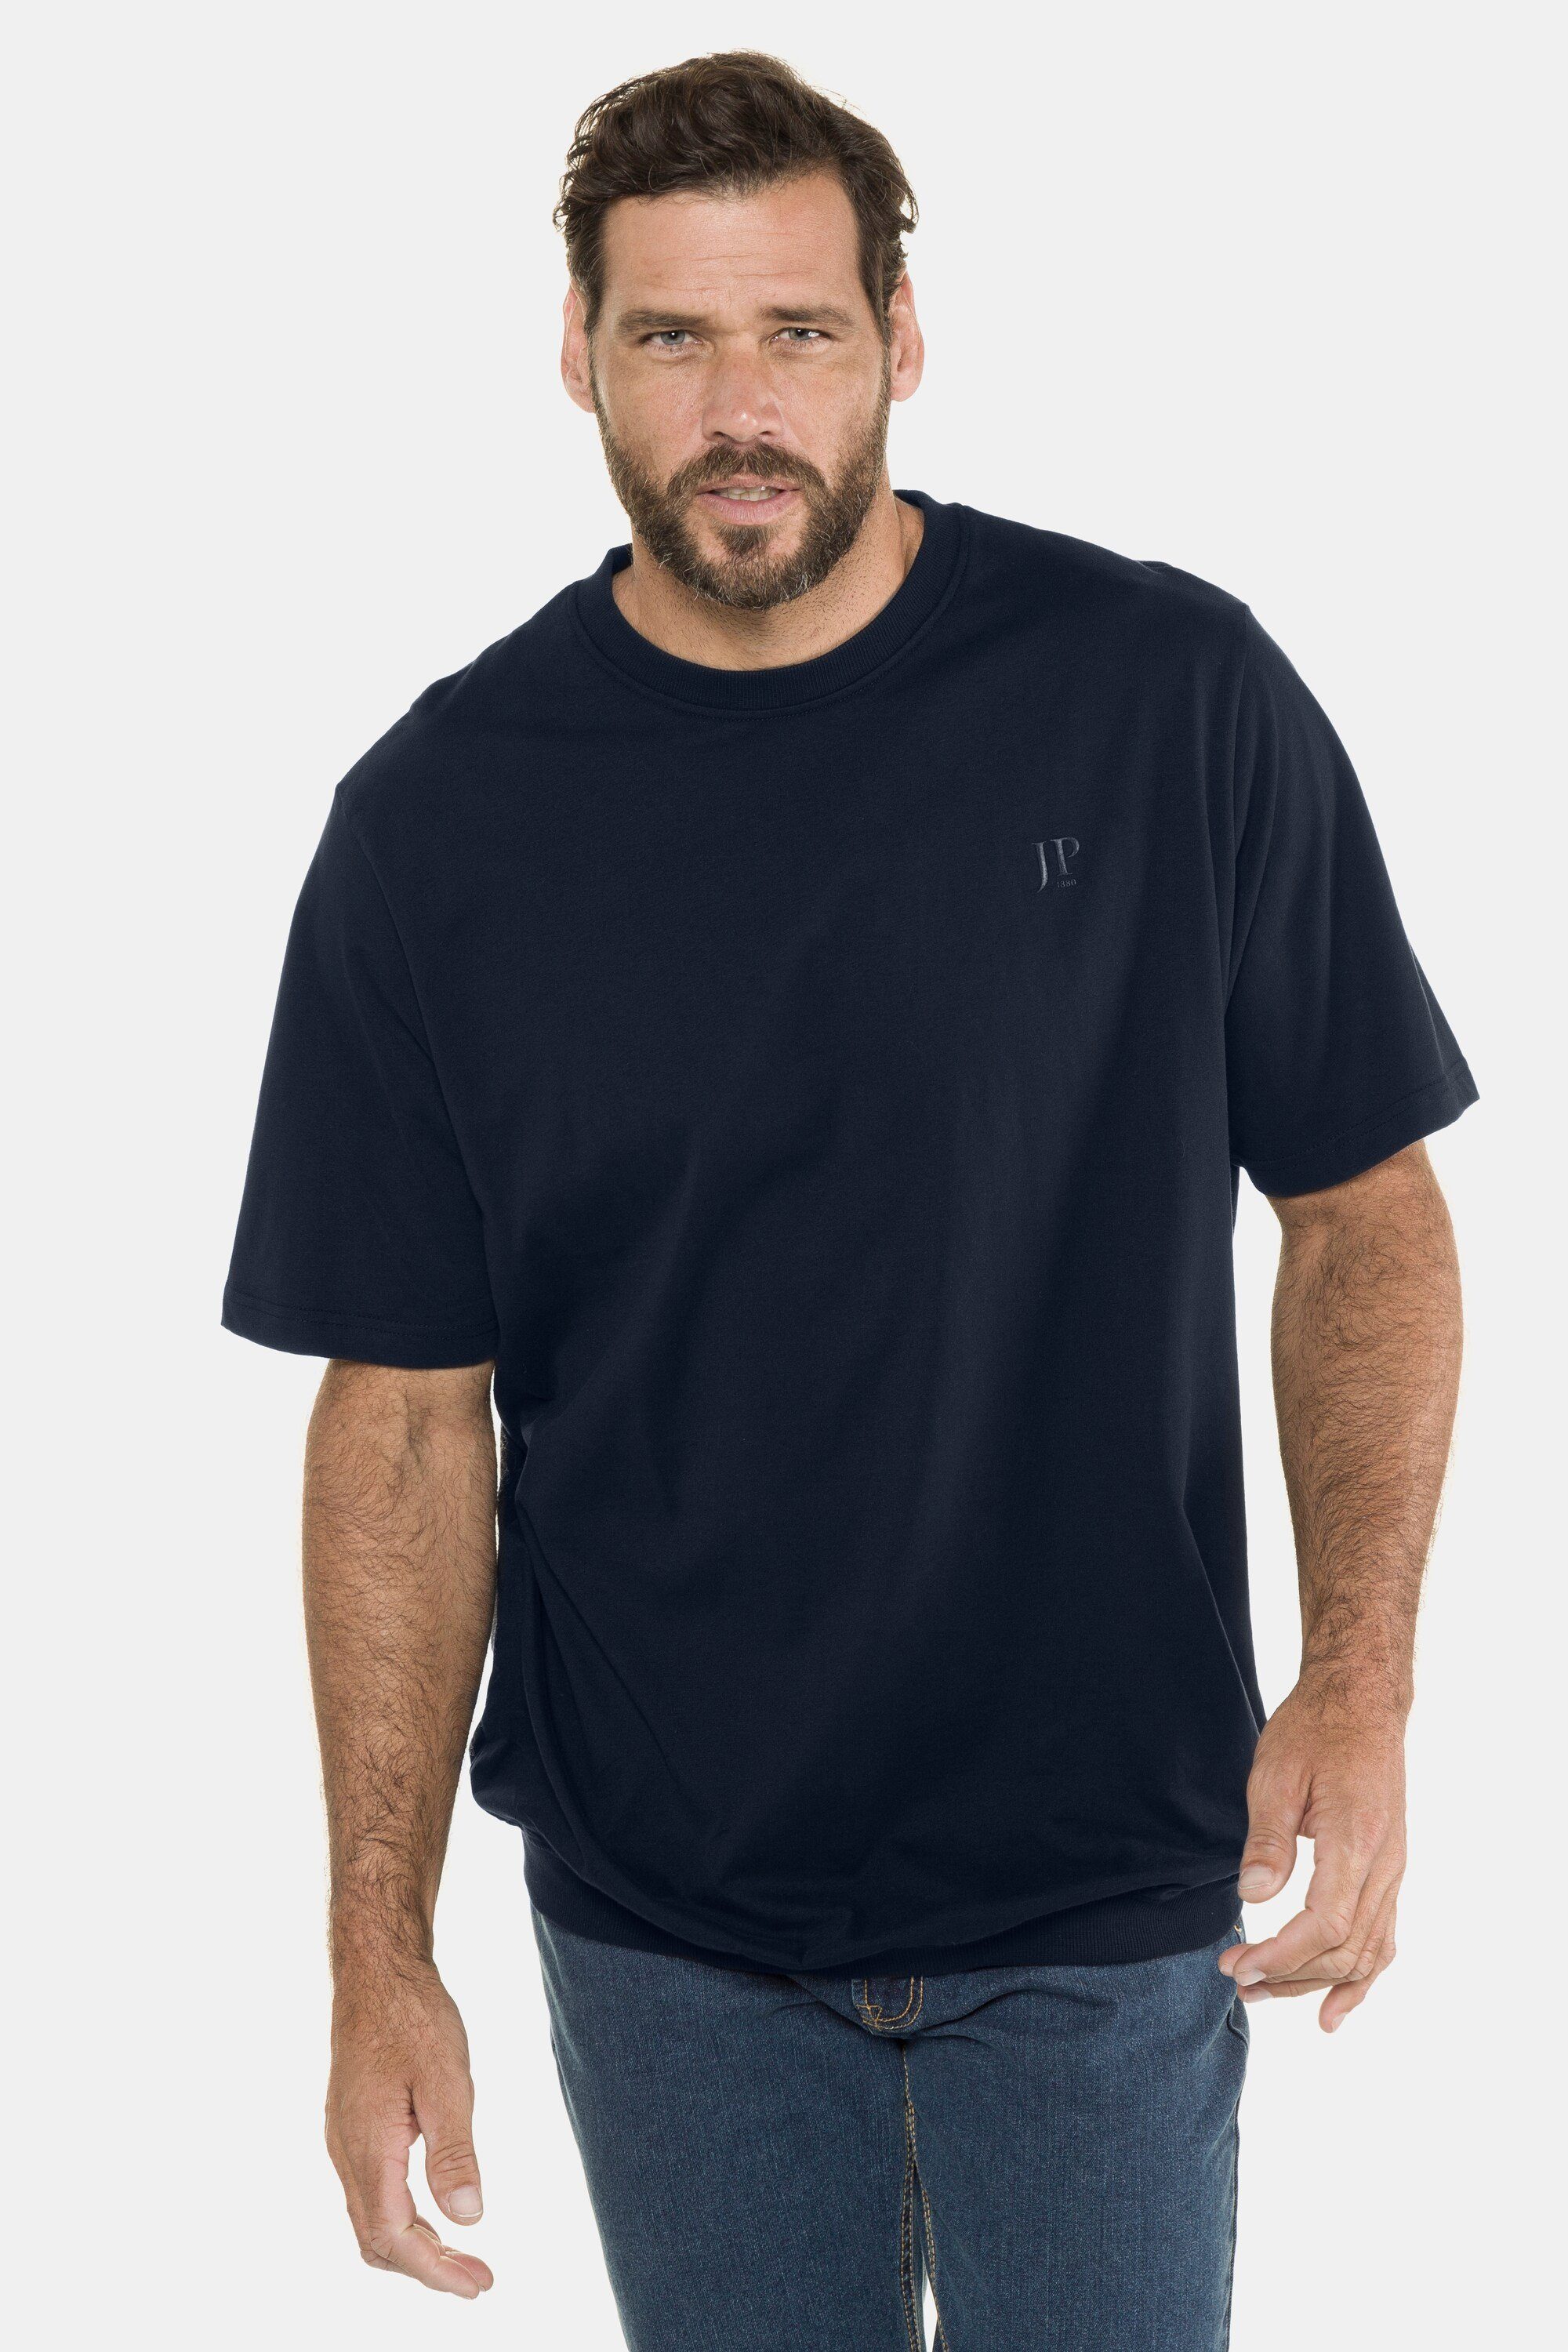 bis JP1880 T-Shirt T-Shirt Bauchfit XXL Basic Halbarm marine dunkel 10XL